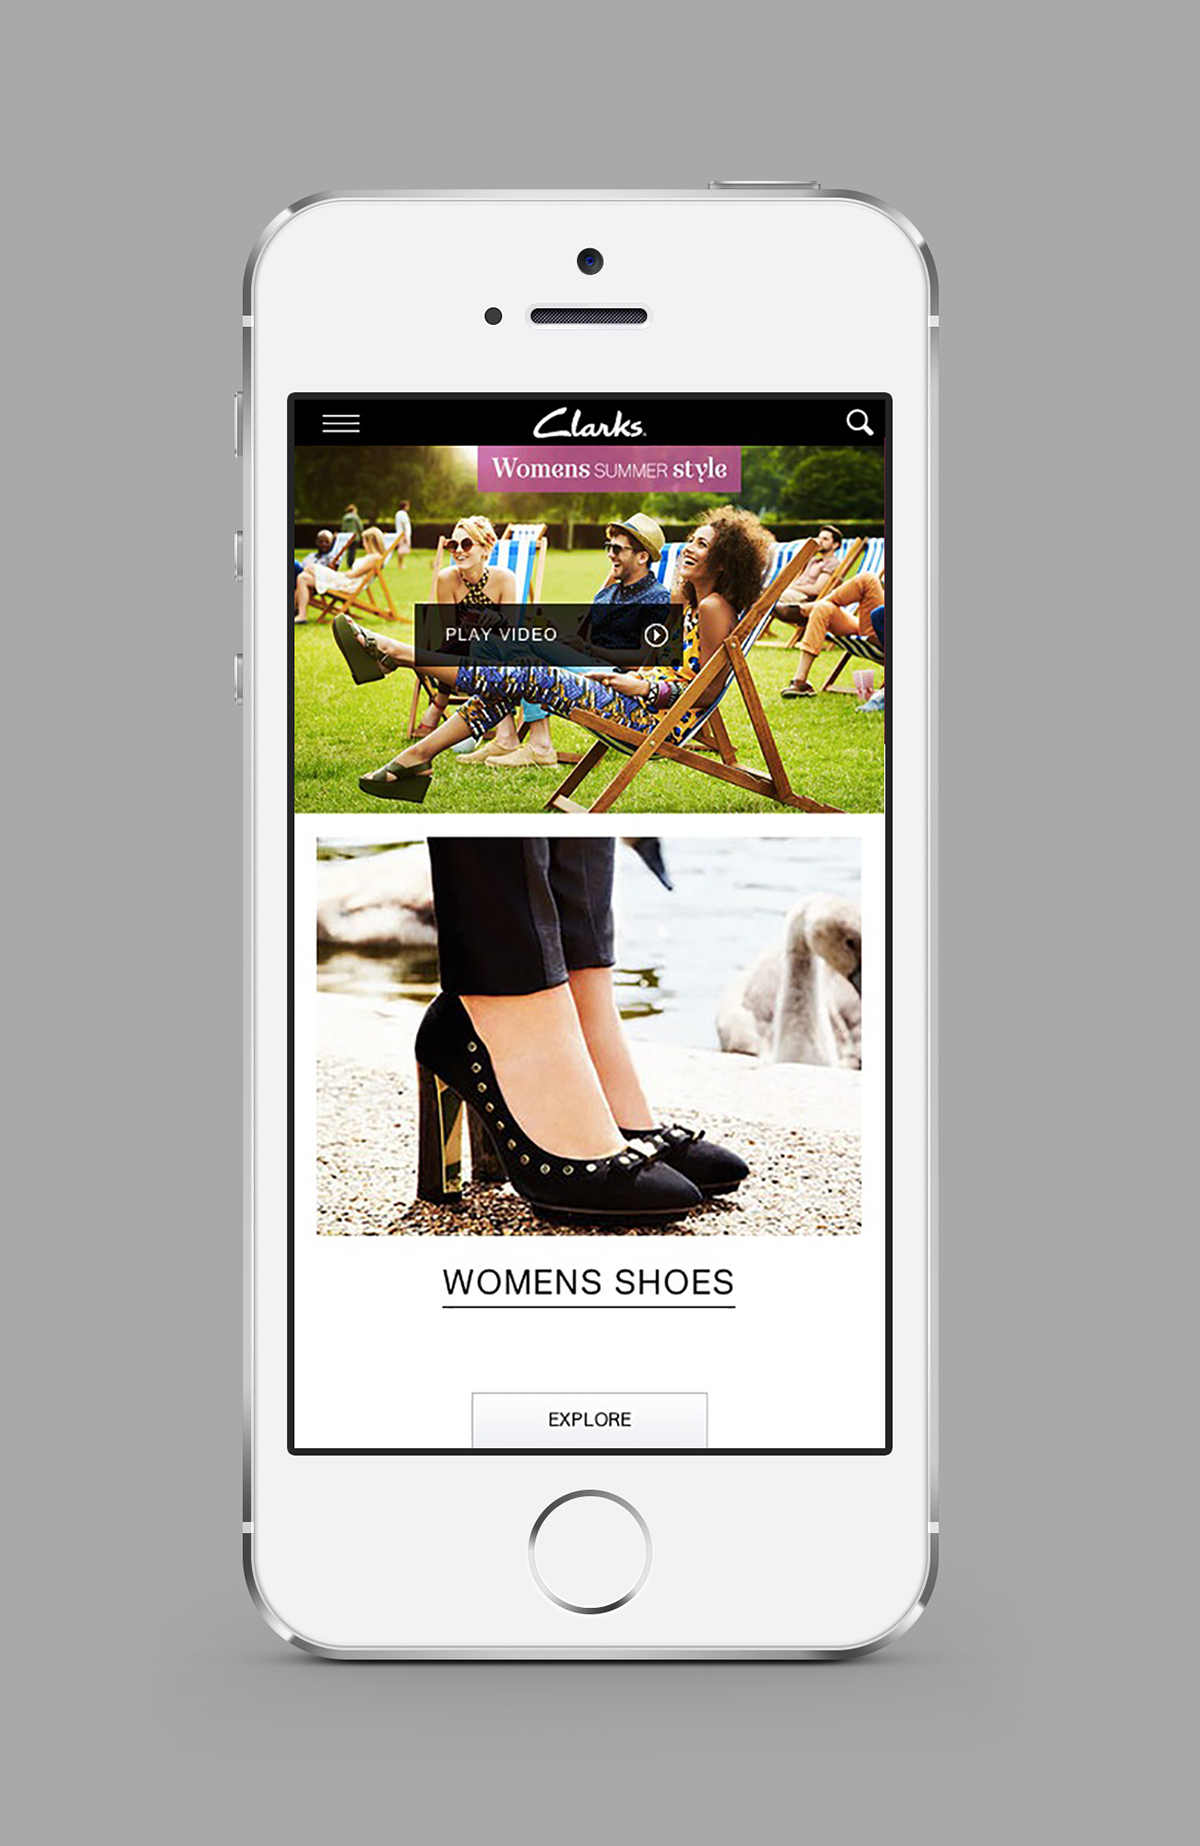 clarks shoes Clarks Responsive shoes lifestyle front end development back